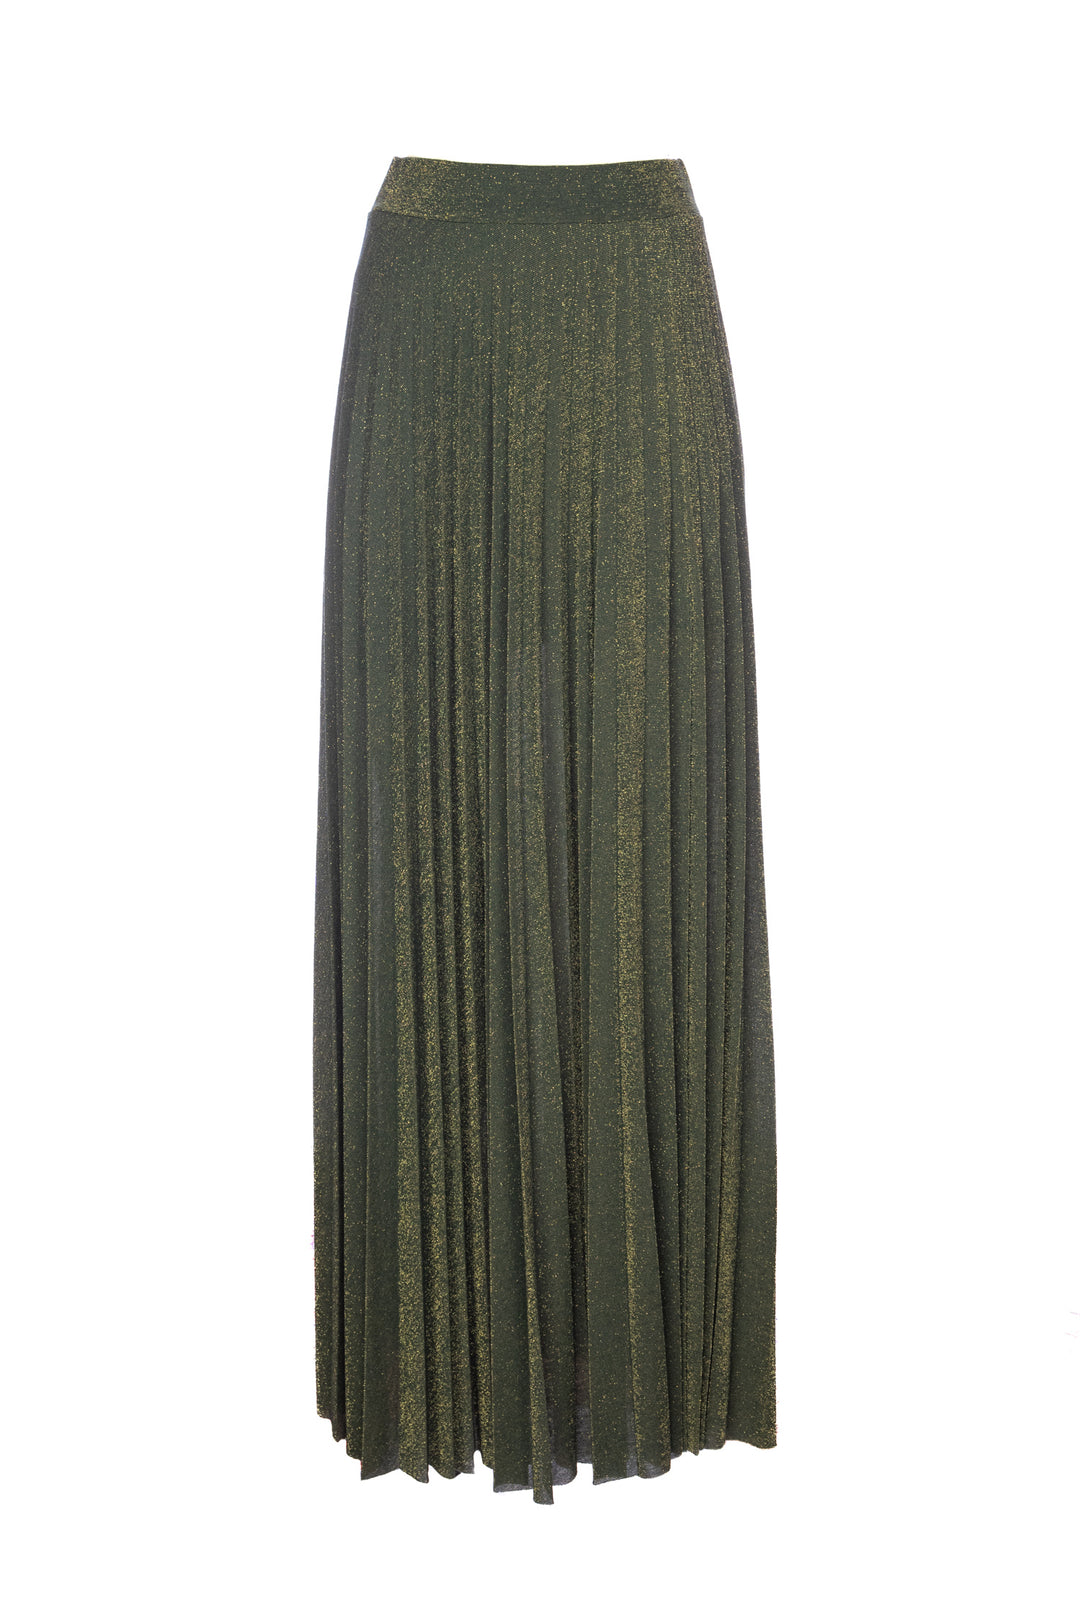 KAOS Gonna lunga verde plissé in jersey lurex - Mancinelli 1954